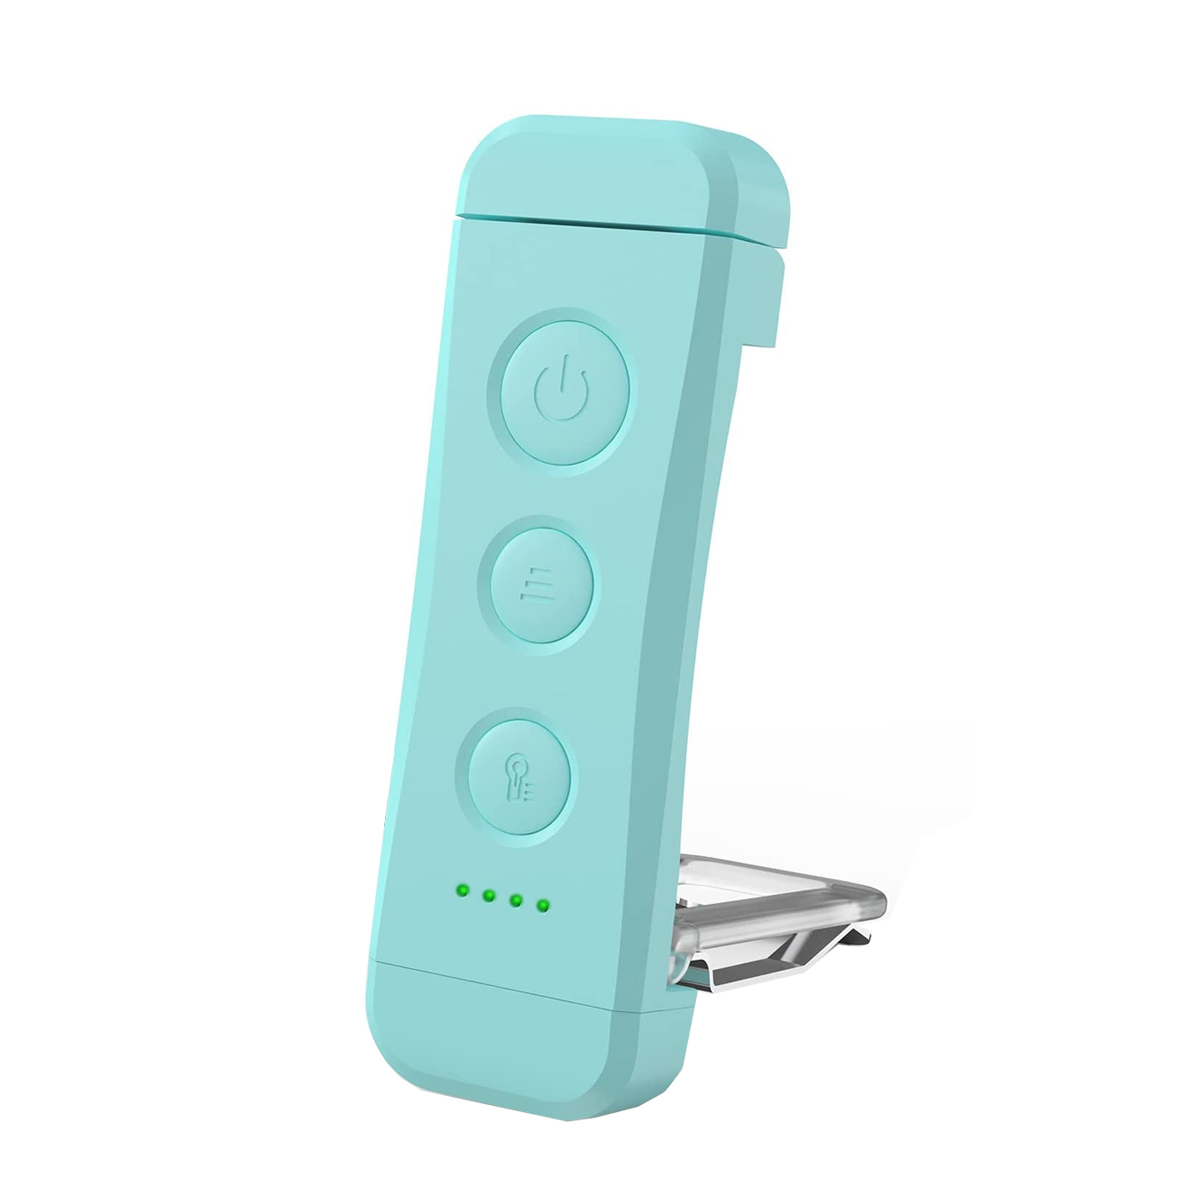 KINSI mini Licht, USB-aufladbare 3 Mini-LED-Buchleuchte, Leselampe Farben Farben Drei